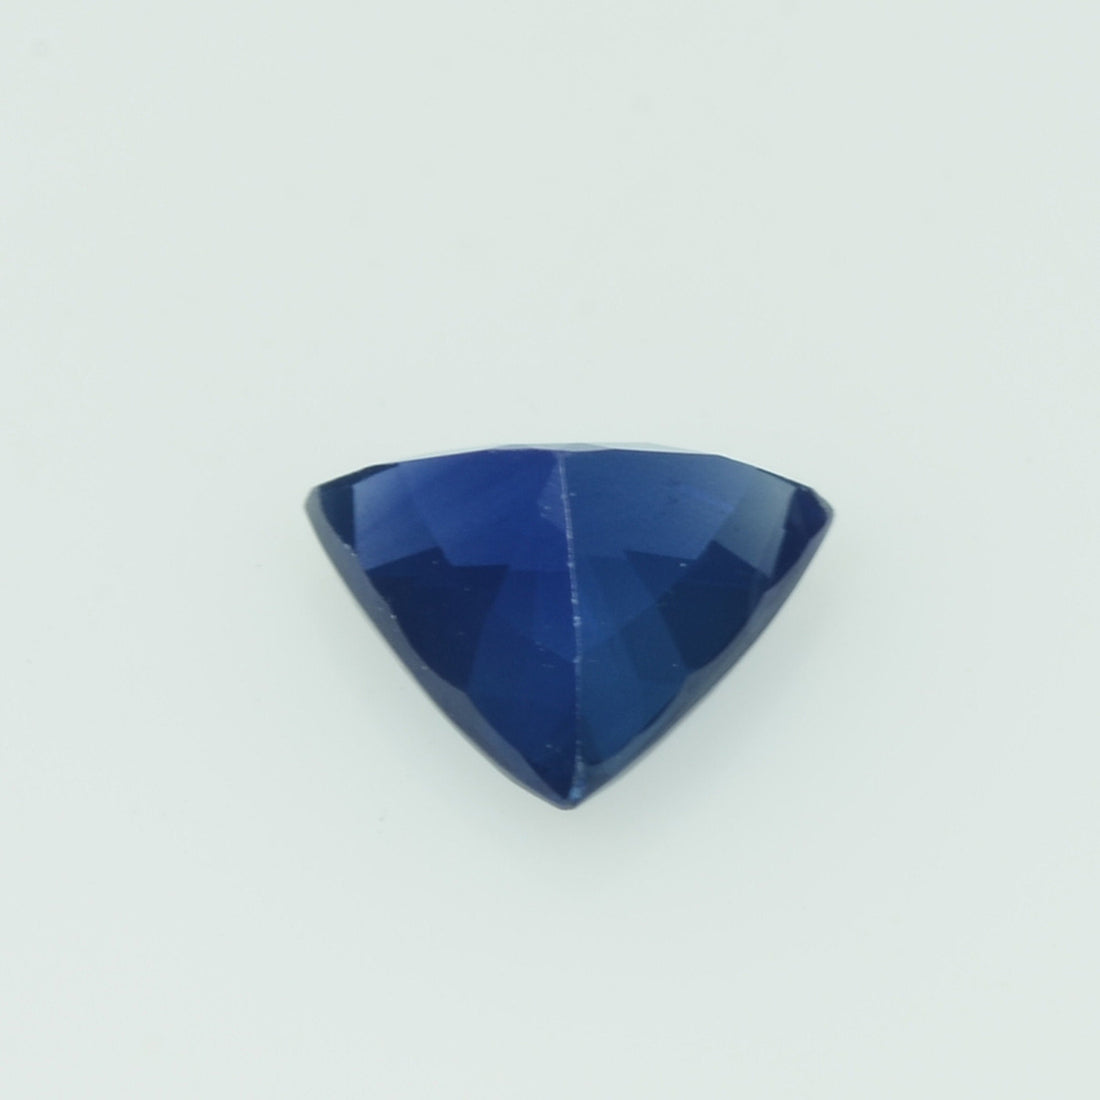 0.40 Cts Natural Blue Sapphire Loose Gemstone Trillion Cut